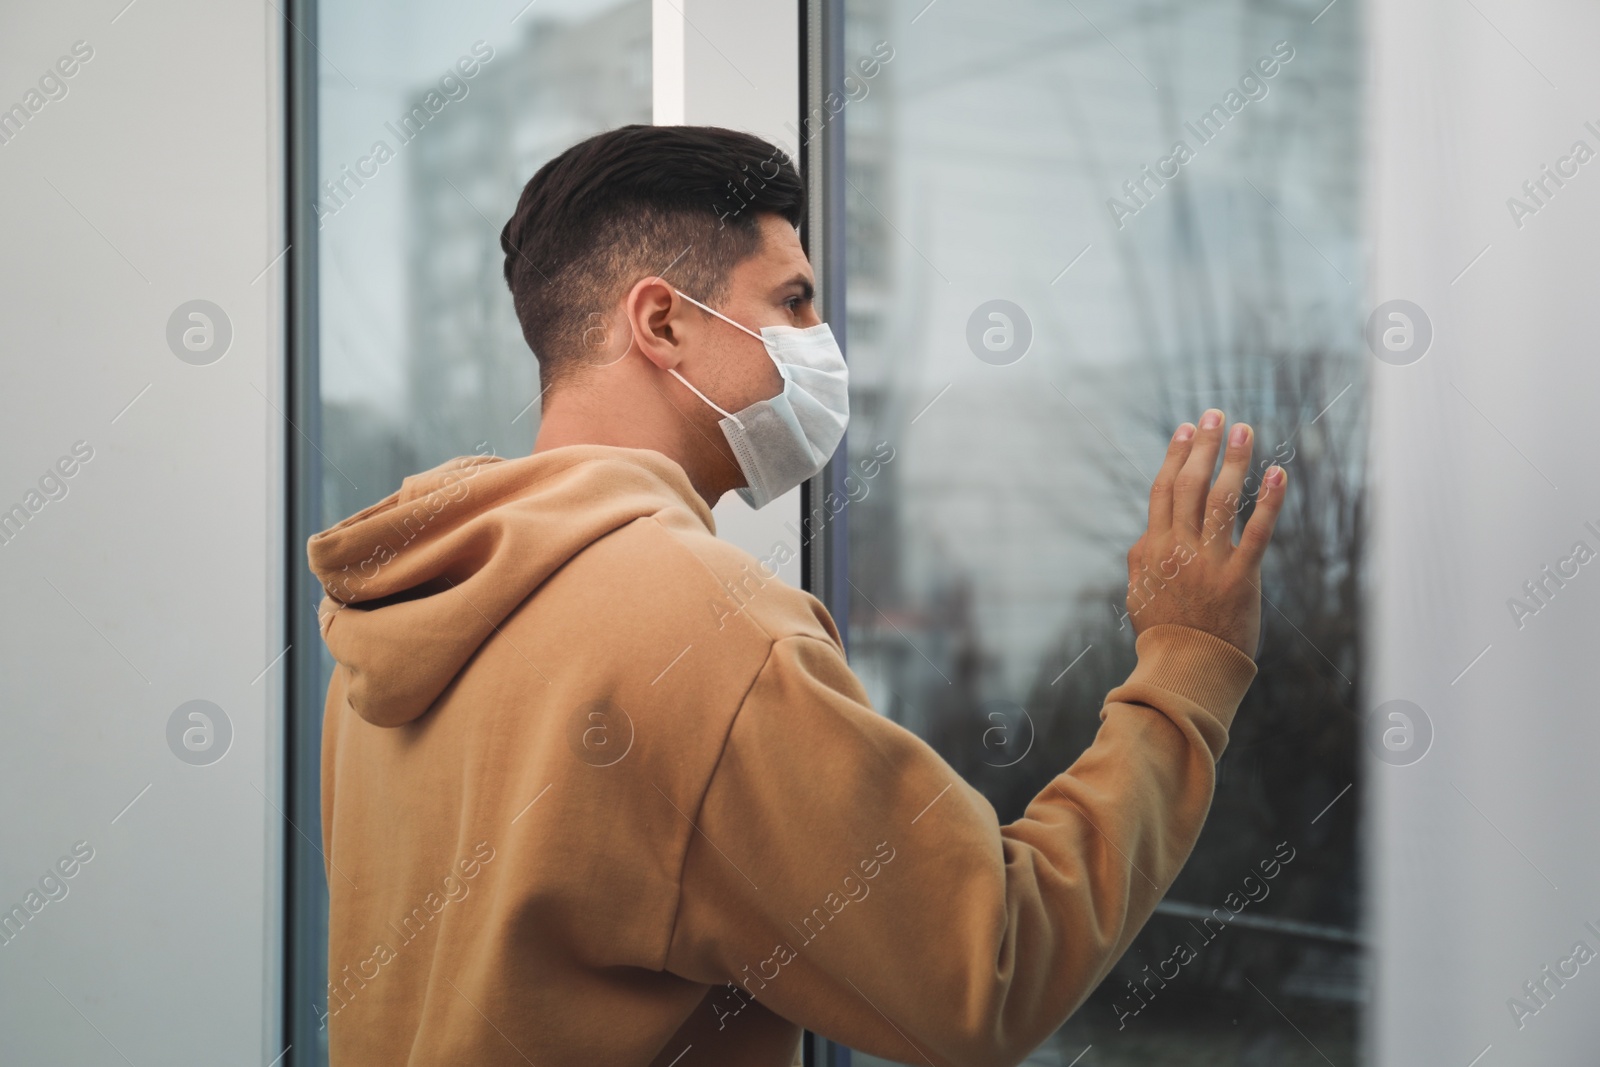 Photo of Sad man in protective mask near window indoors. Self-isolation during coronavirus pandemic